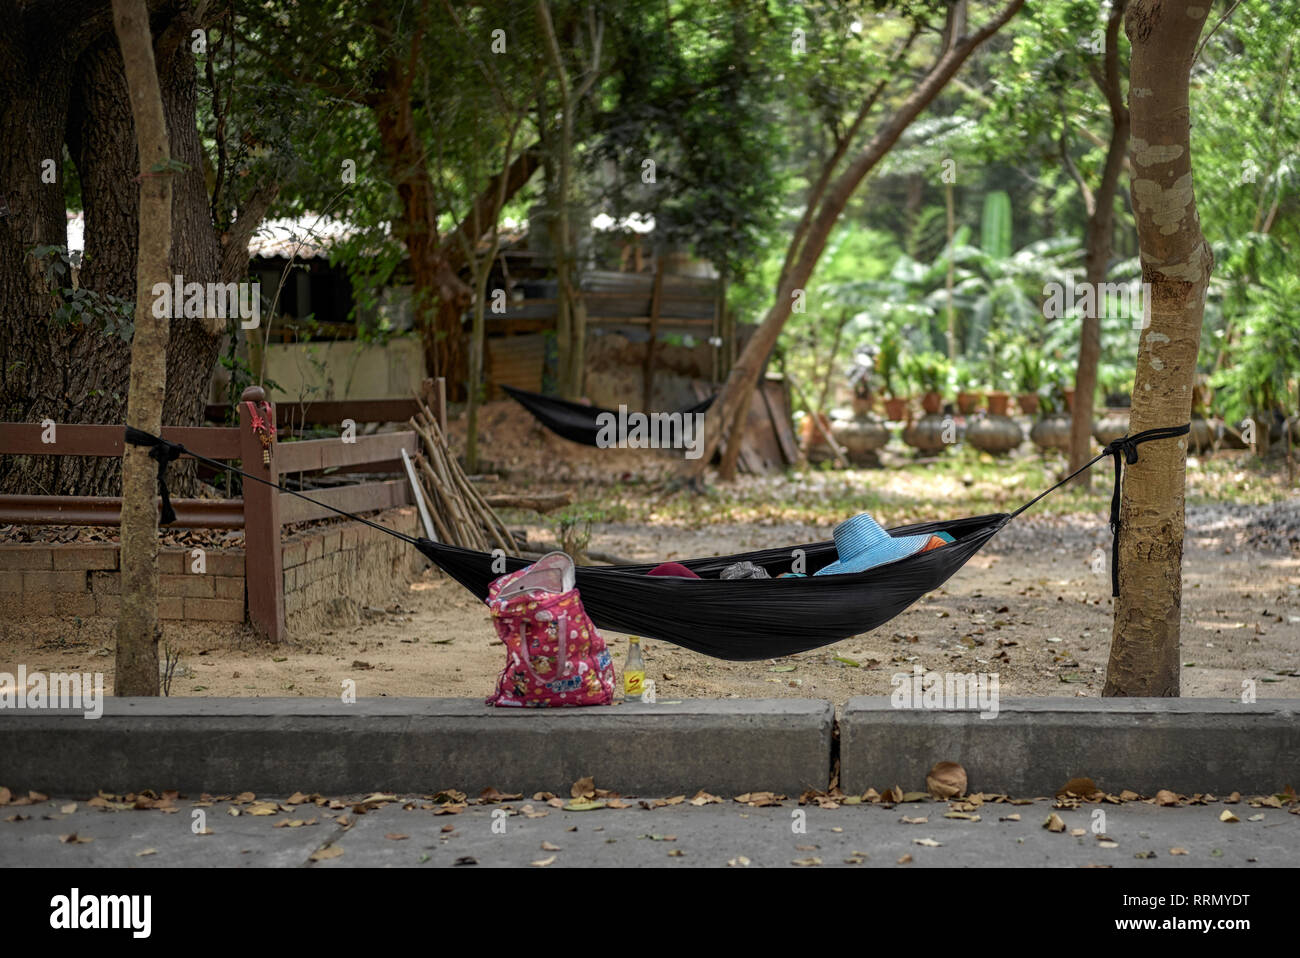 Sleeping hammock. Thailand worker taking a break and sleeping in a hammock strung between trees Stock Photo